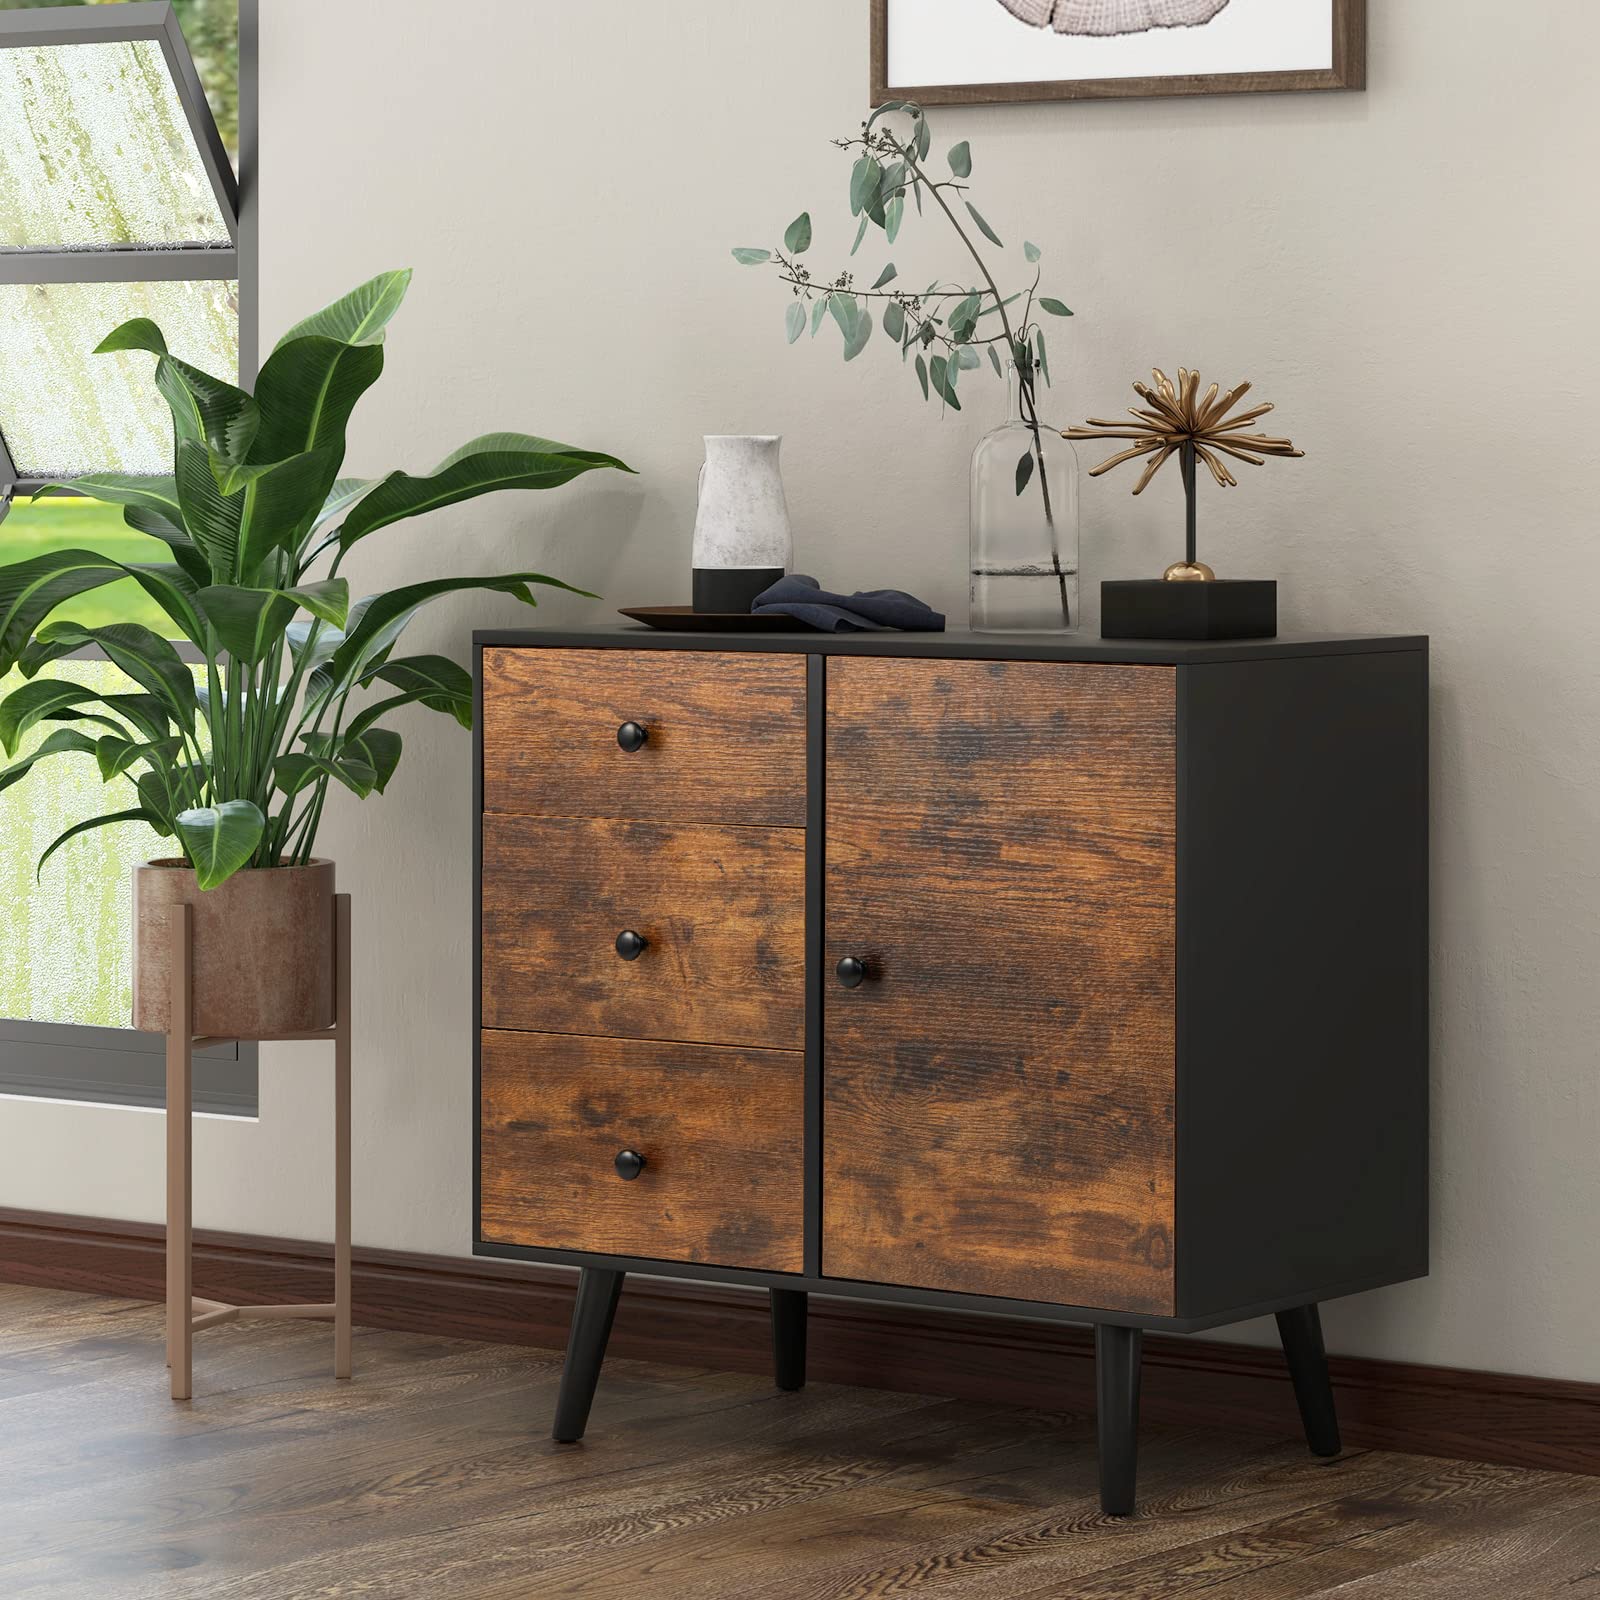 Giantex Storage Cabinet with 3 Drawers - Wood Buffet Sideboard W/Adjustable Shelf